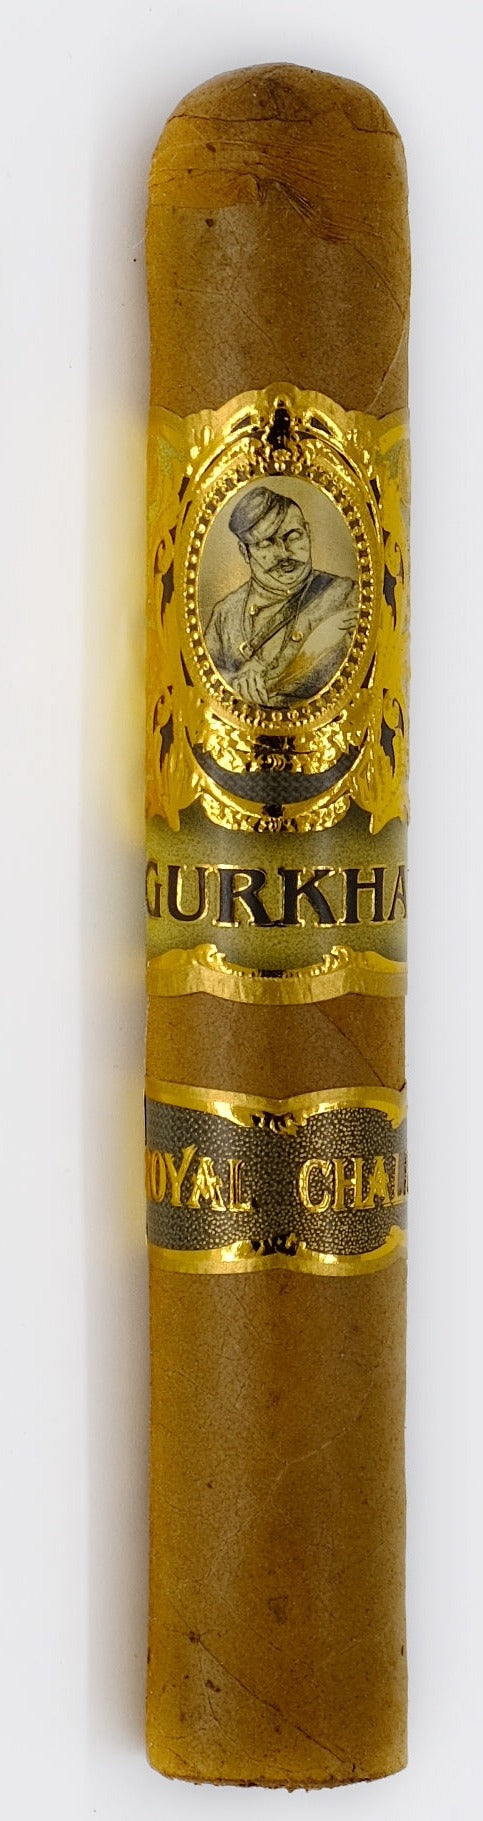 Gurkha Royal Challenge Zigarre im Robusto Format_einzelne Zigarre